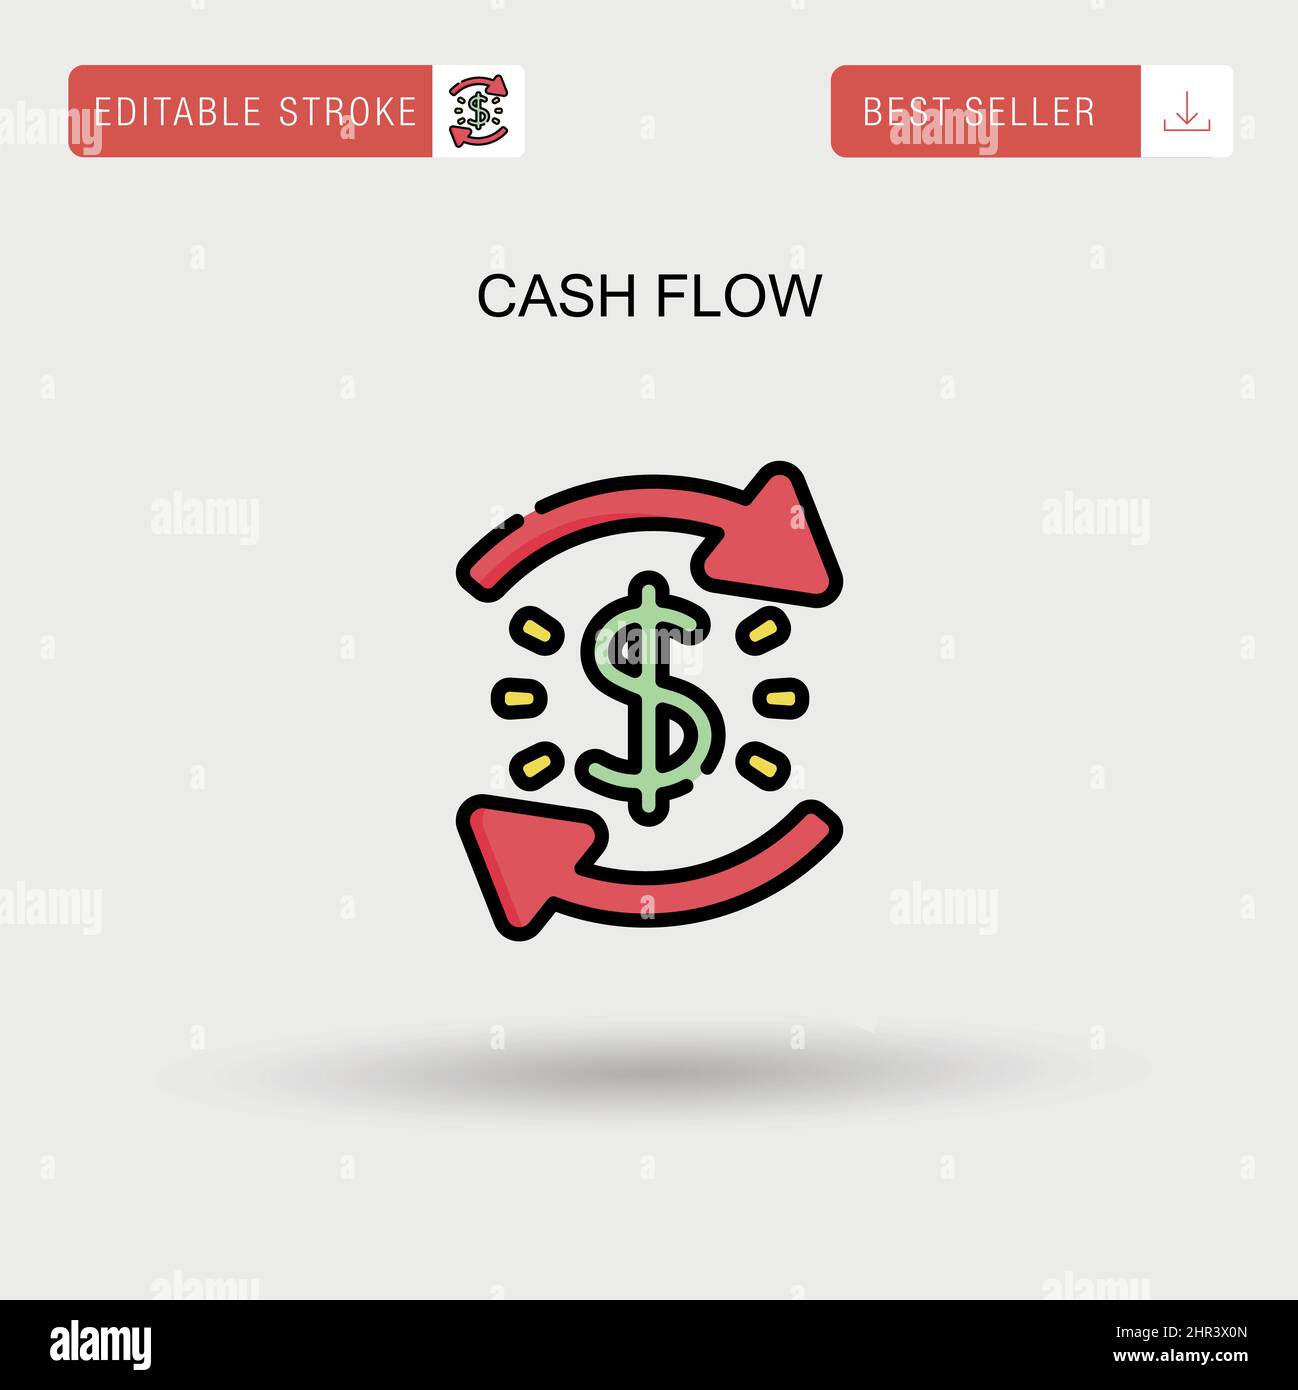 Einfaches Vektorsymbol für Cashflow. Stock Vektor